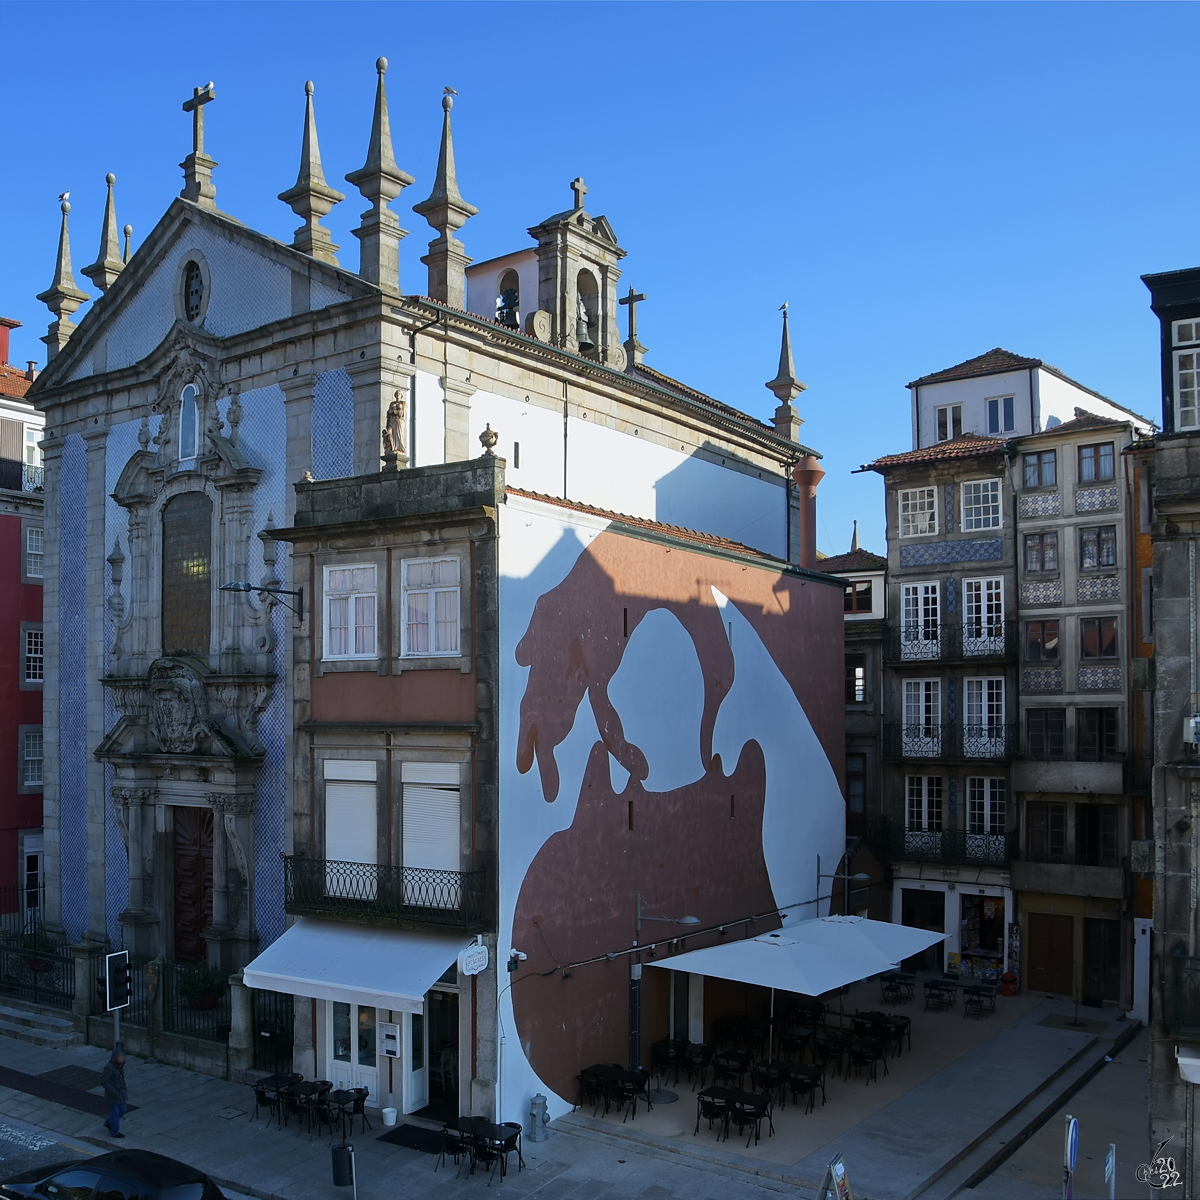 Ein kleines Restaurant, dahinter die St. Nicholas-Kirche (Igreja Paroquial de So Nicolau) in Porto. (Januar 2017)